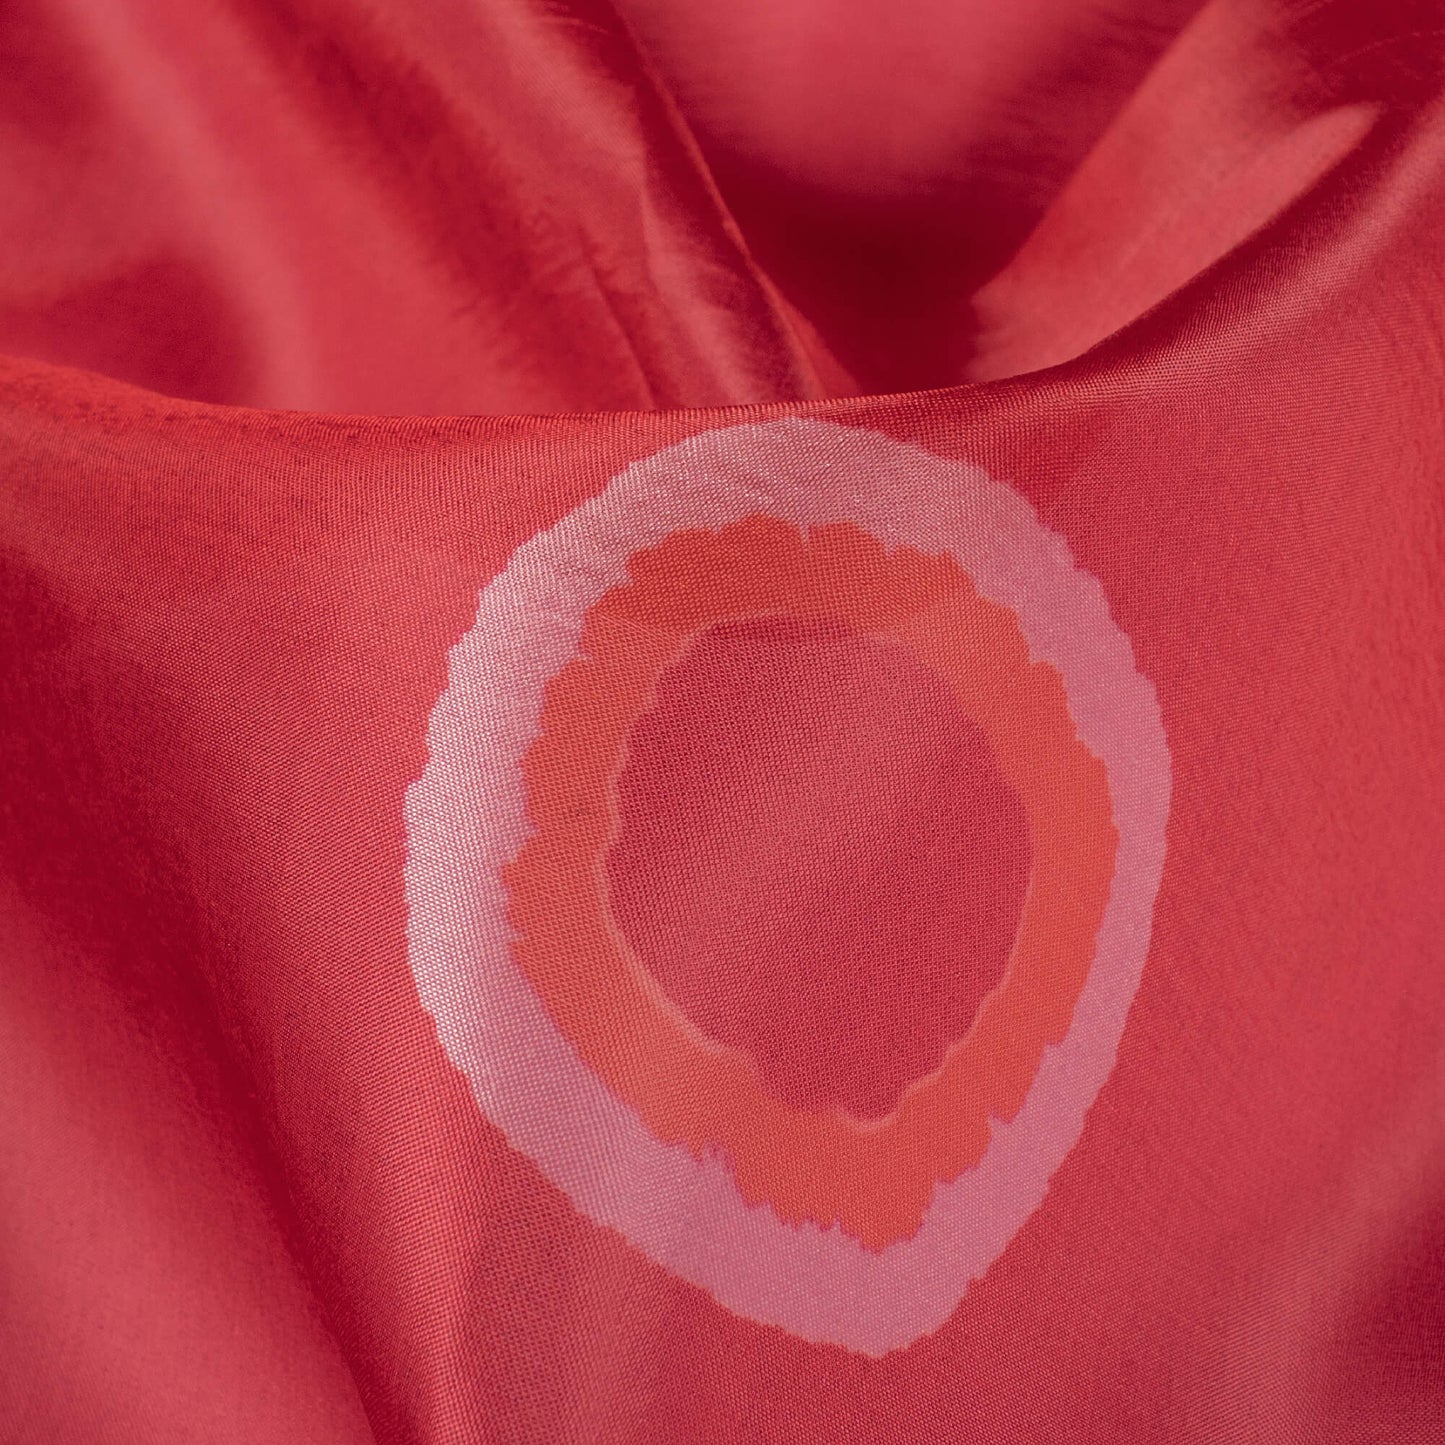 Vermilion Red And White Shibori Pattern Digital Print Organza Satin Fabric